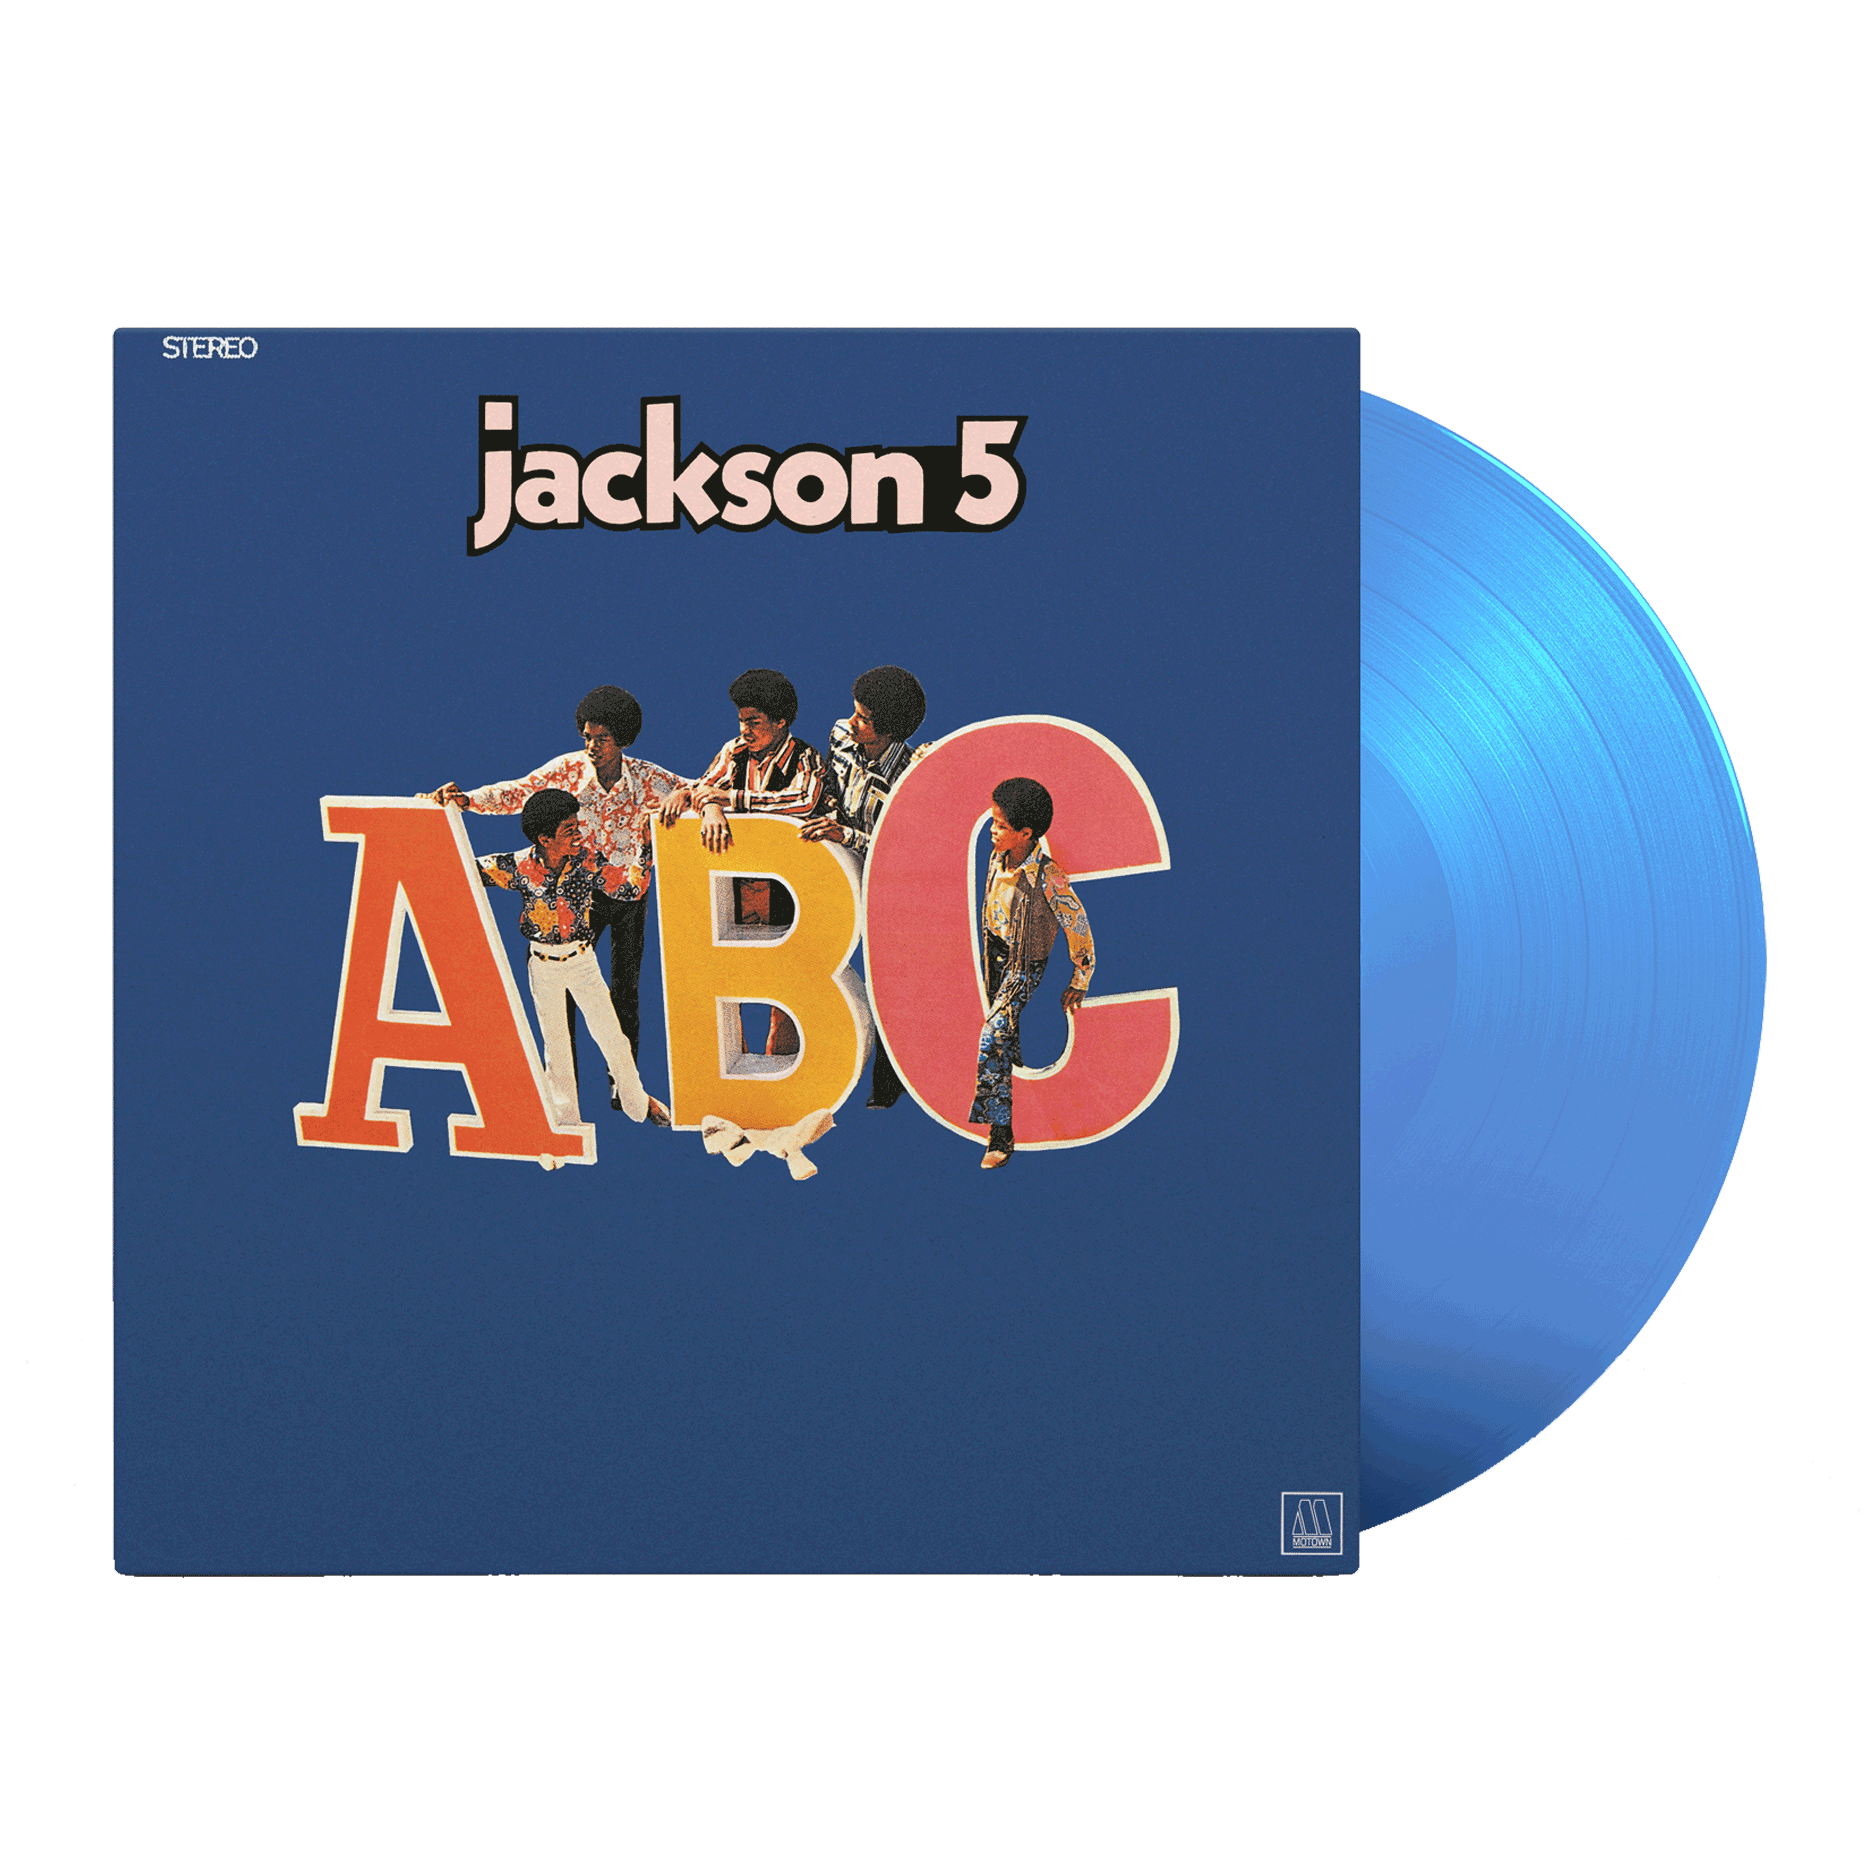 Jackson 5 - ABC: Limited Blue Vinyl LP